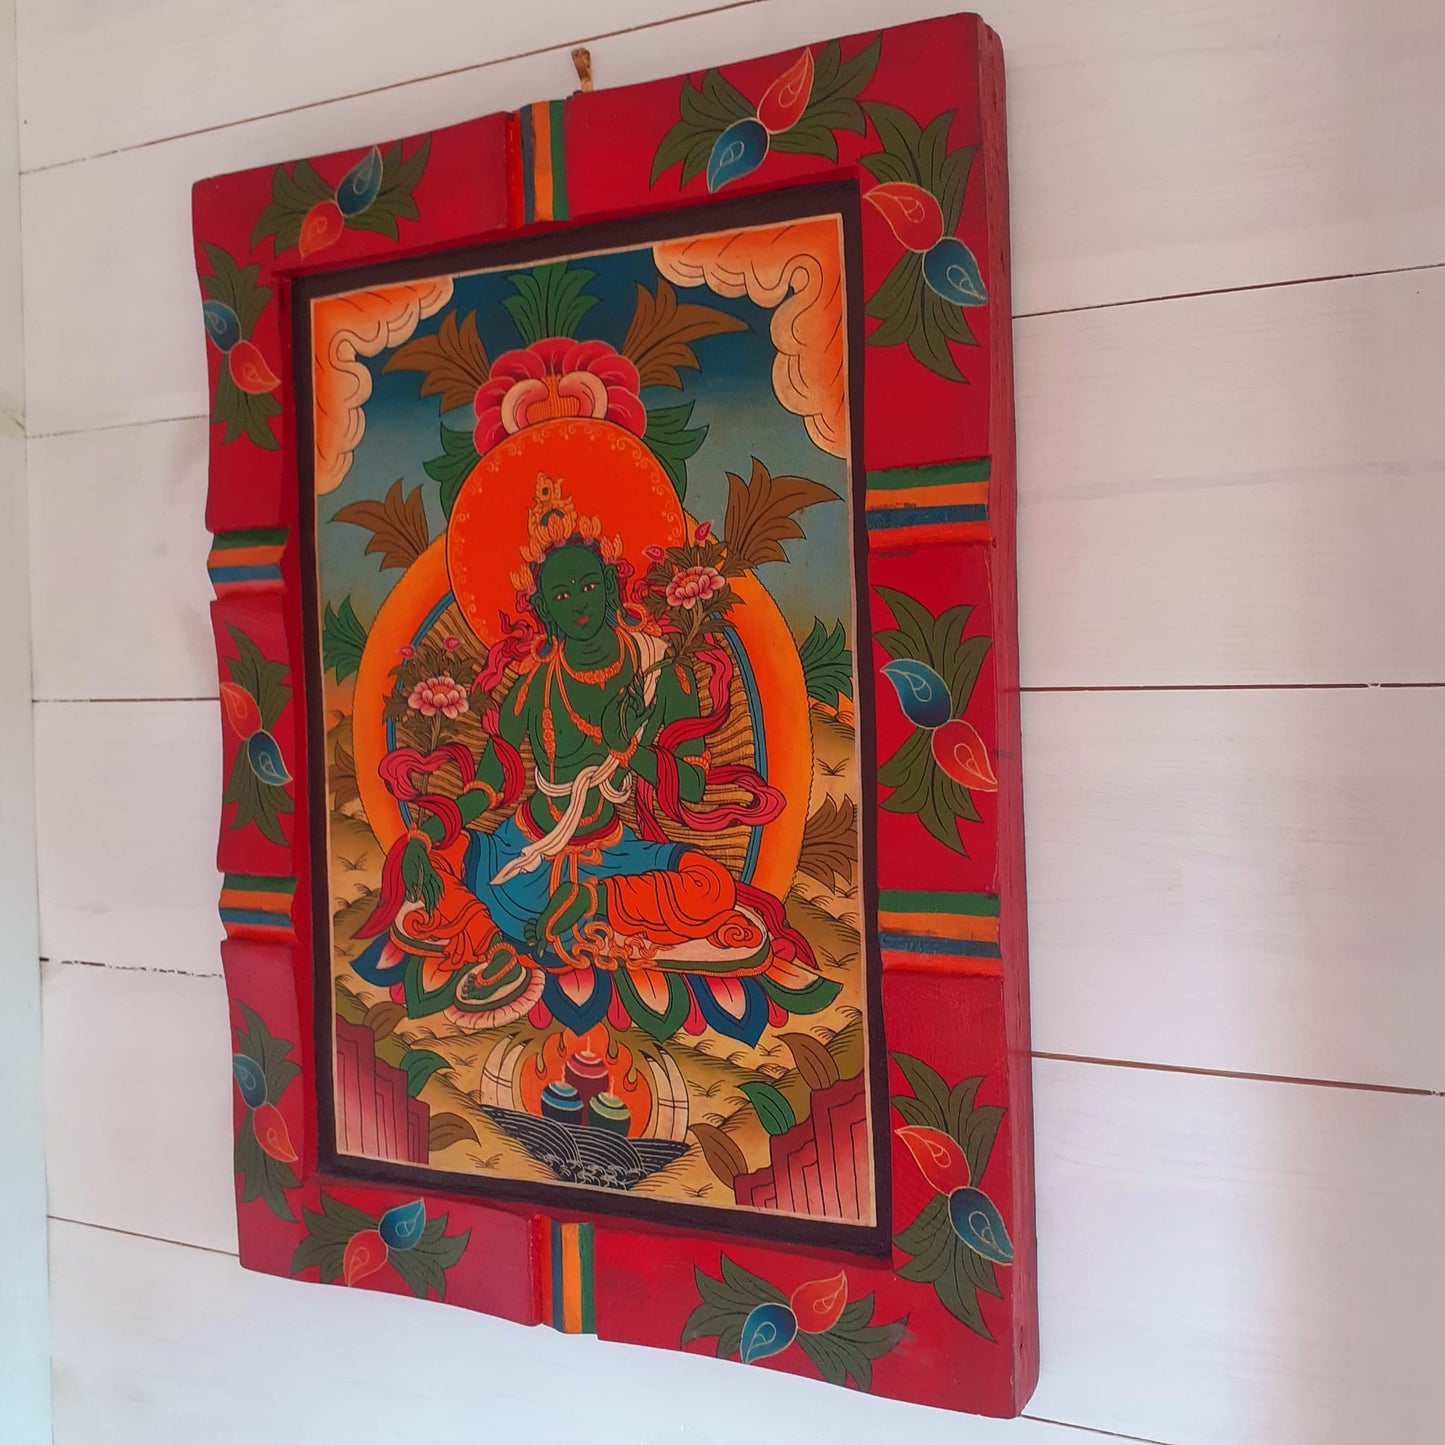 Tibetan Green Tara  Wooden Thangka picture 41cm x 30cm x 2.5cm